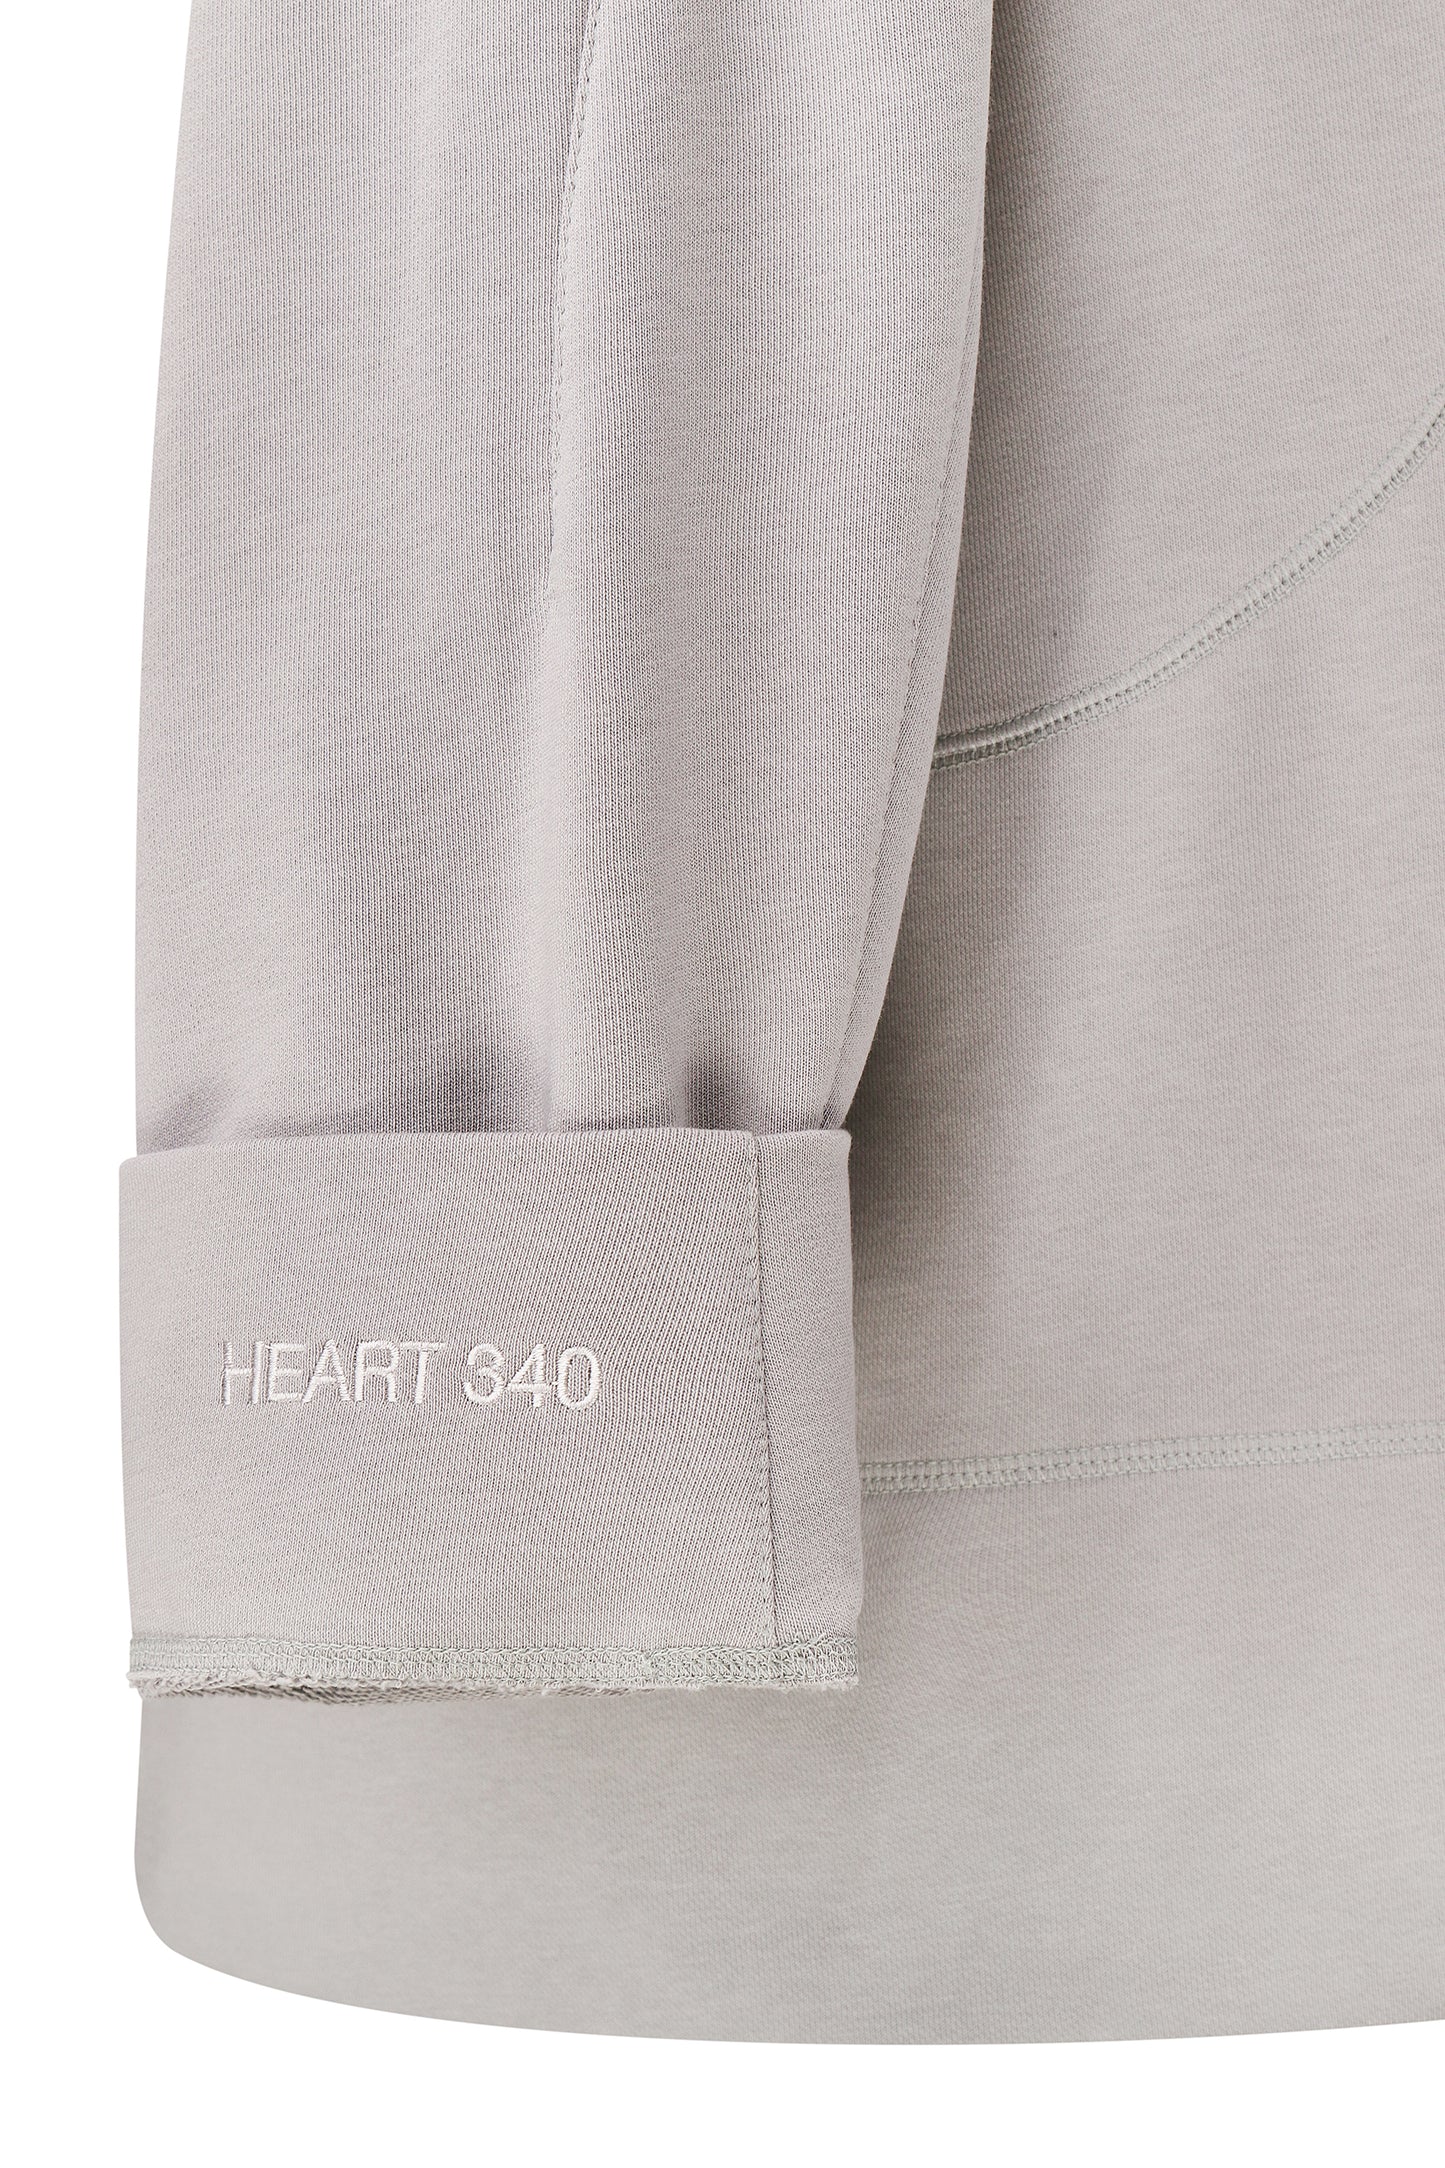 Gray hoodie with handmade heart embroidery